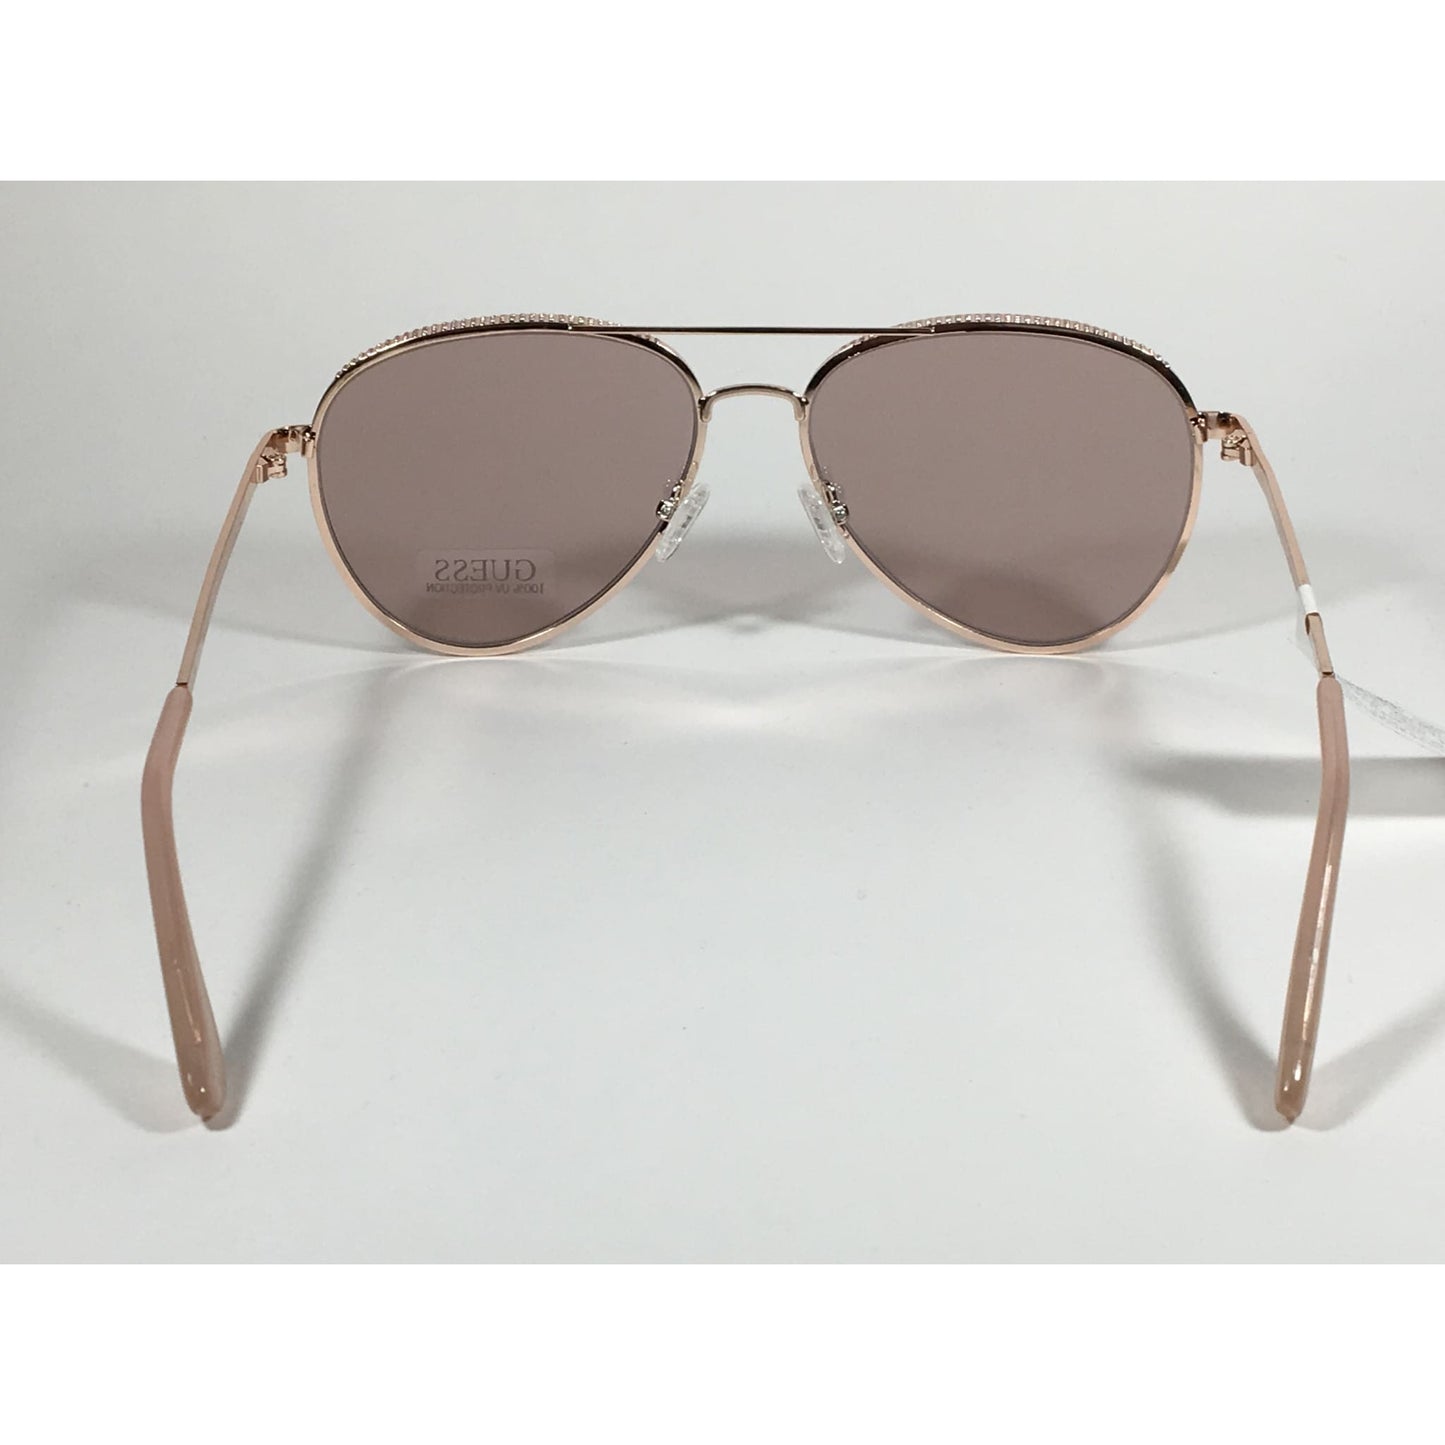 Guess Heavy Aviator Sunglasses Rose Gold Metal Frame Silver Mirror Flash Lens GF0350 28U - Sunglasses